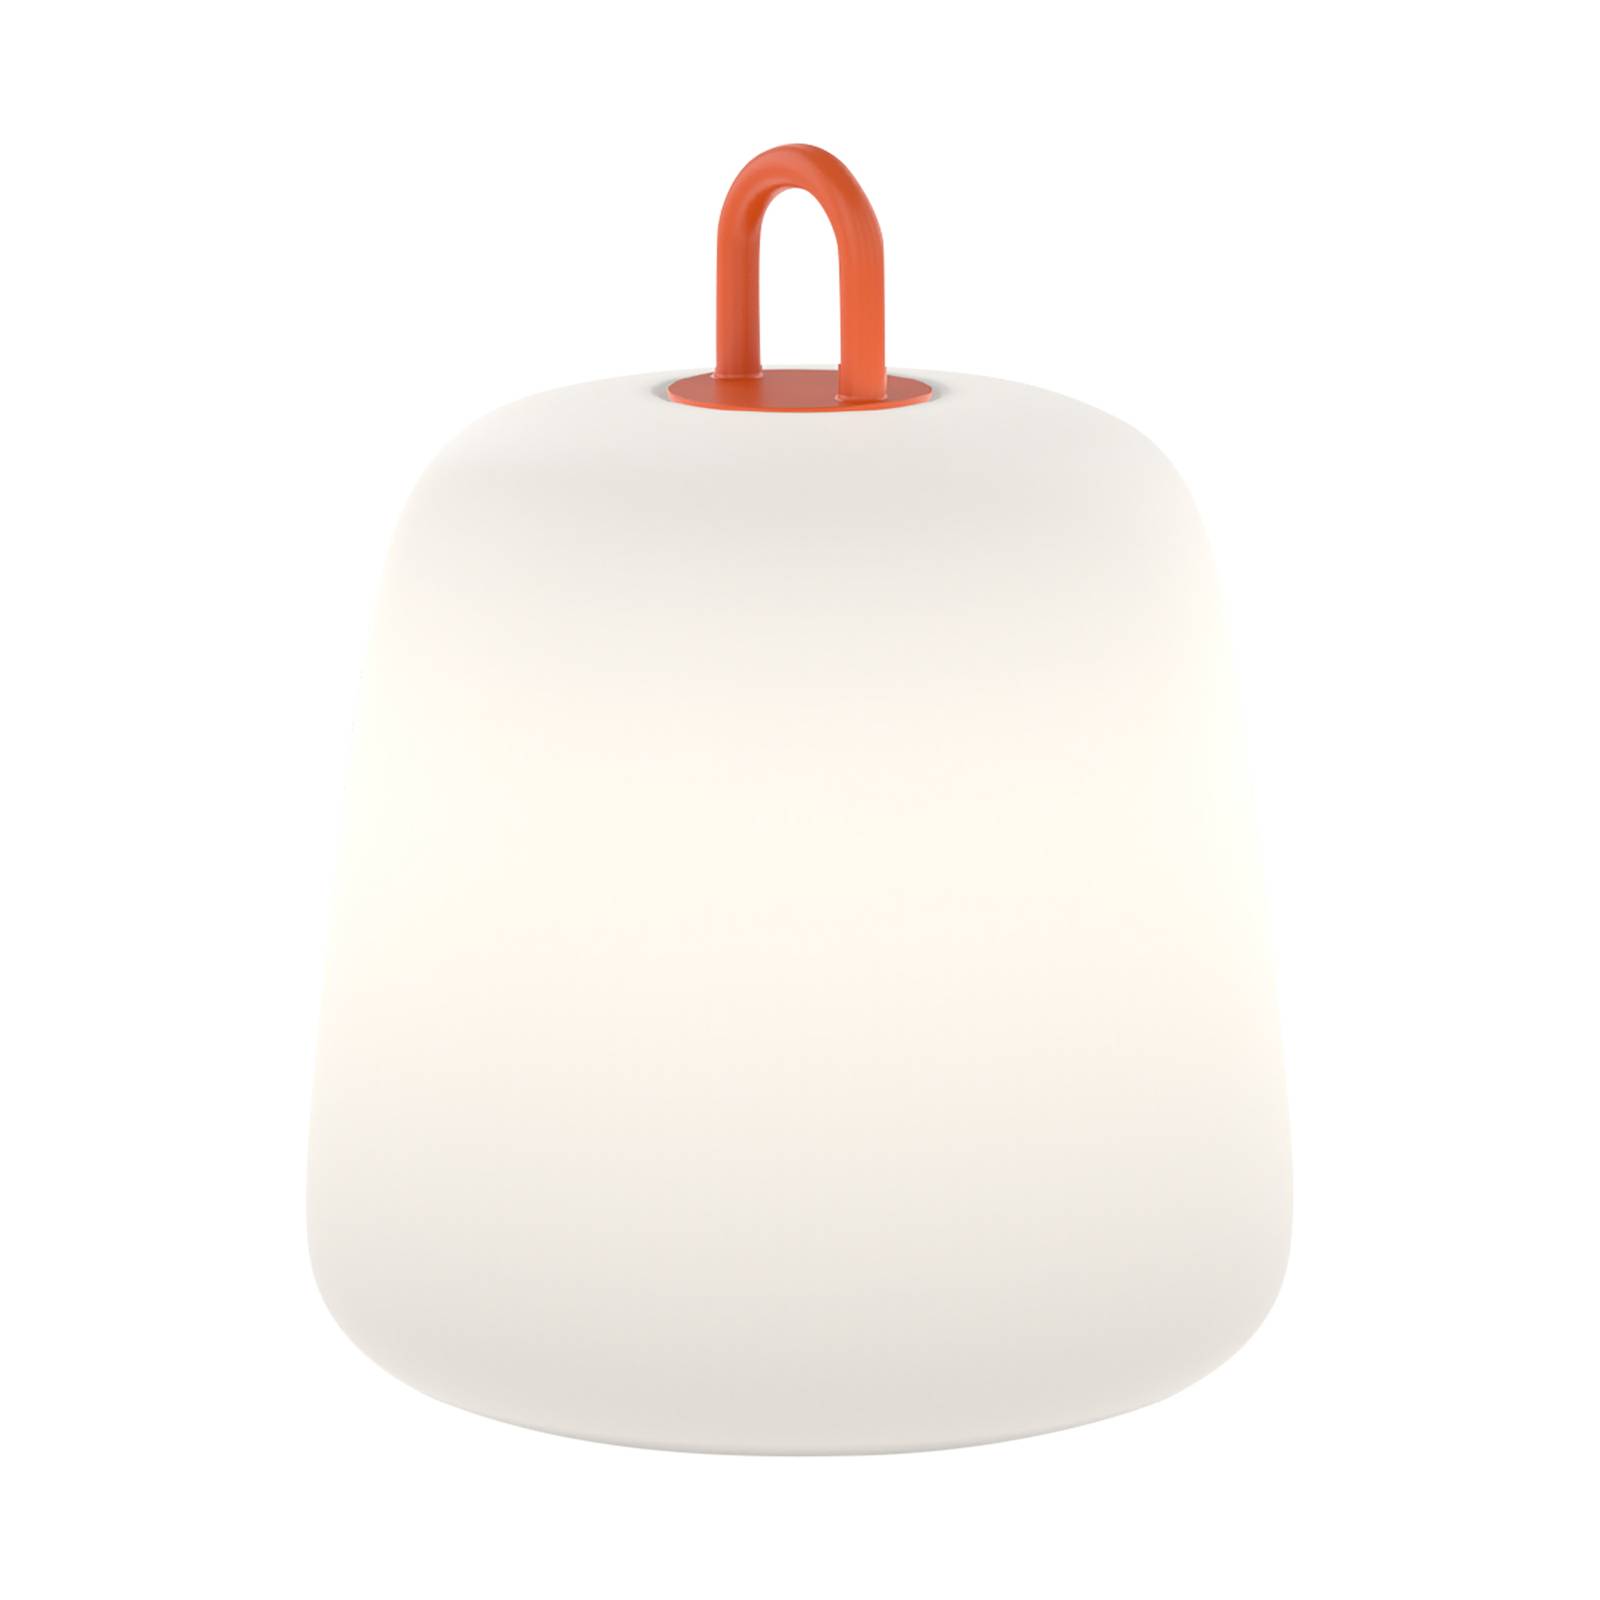 Wever & ducré lighting wever & ducré costa 2.0 led dekorációs lámpa opál/narancs színű